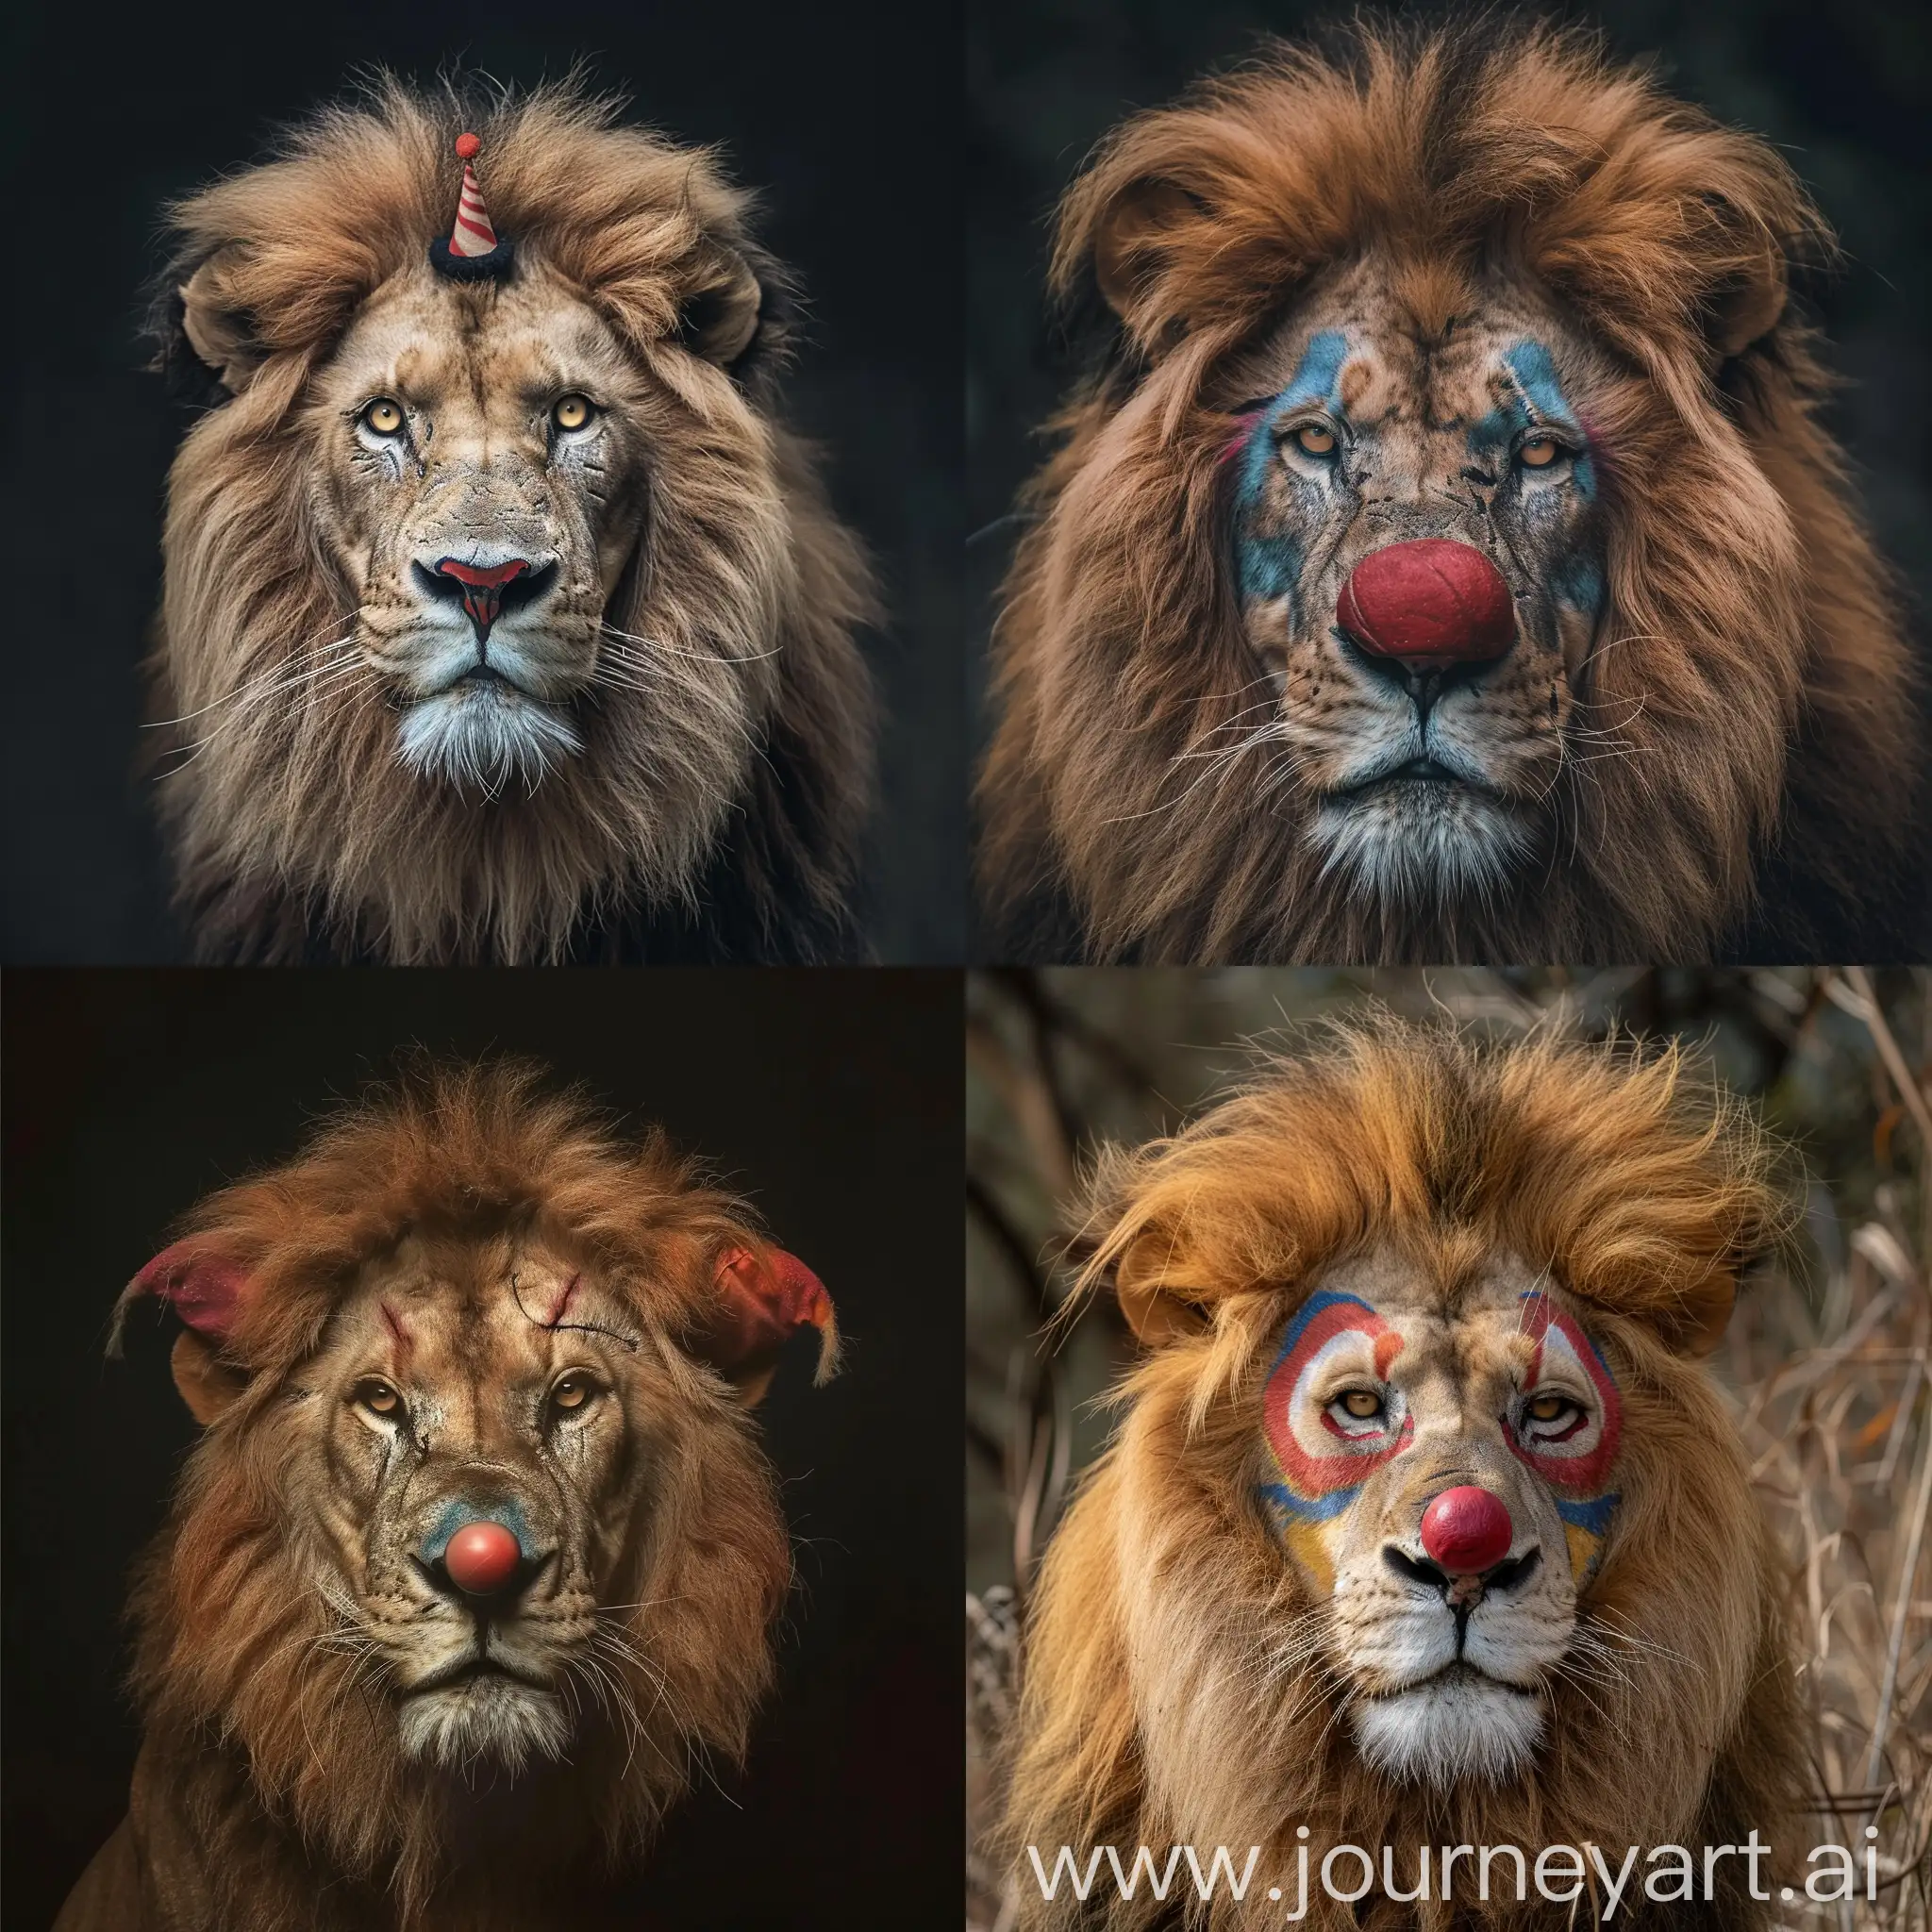 a lion with a clown face
